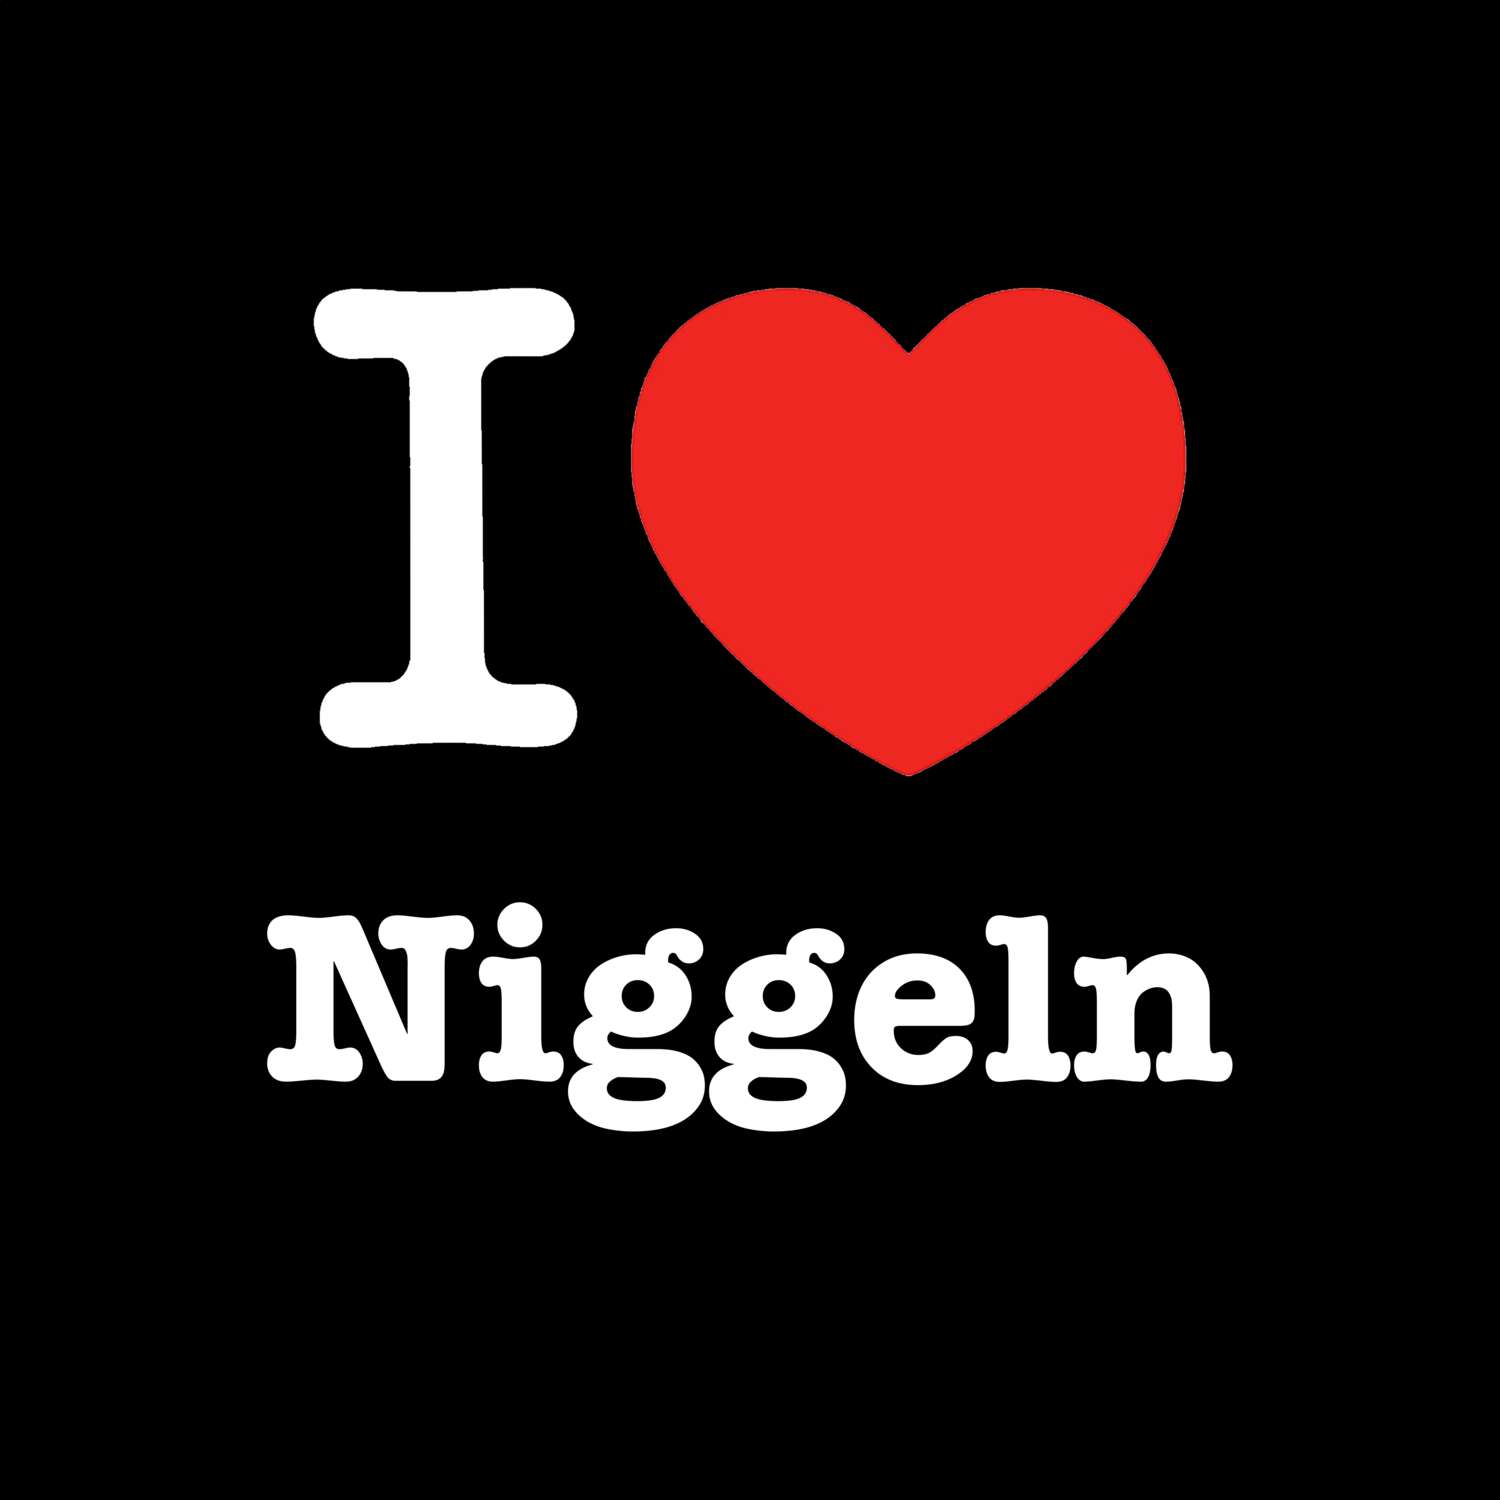 Niggeln T-Shirt »I love«